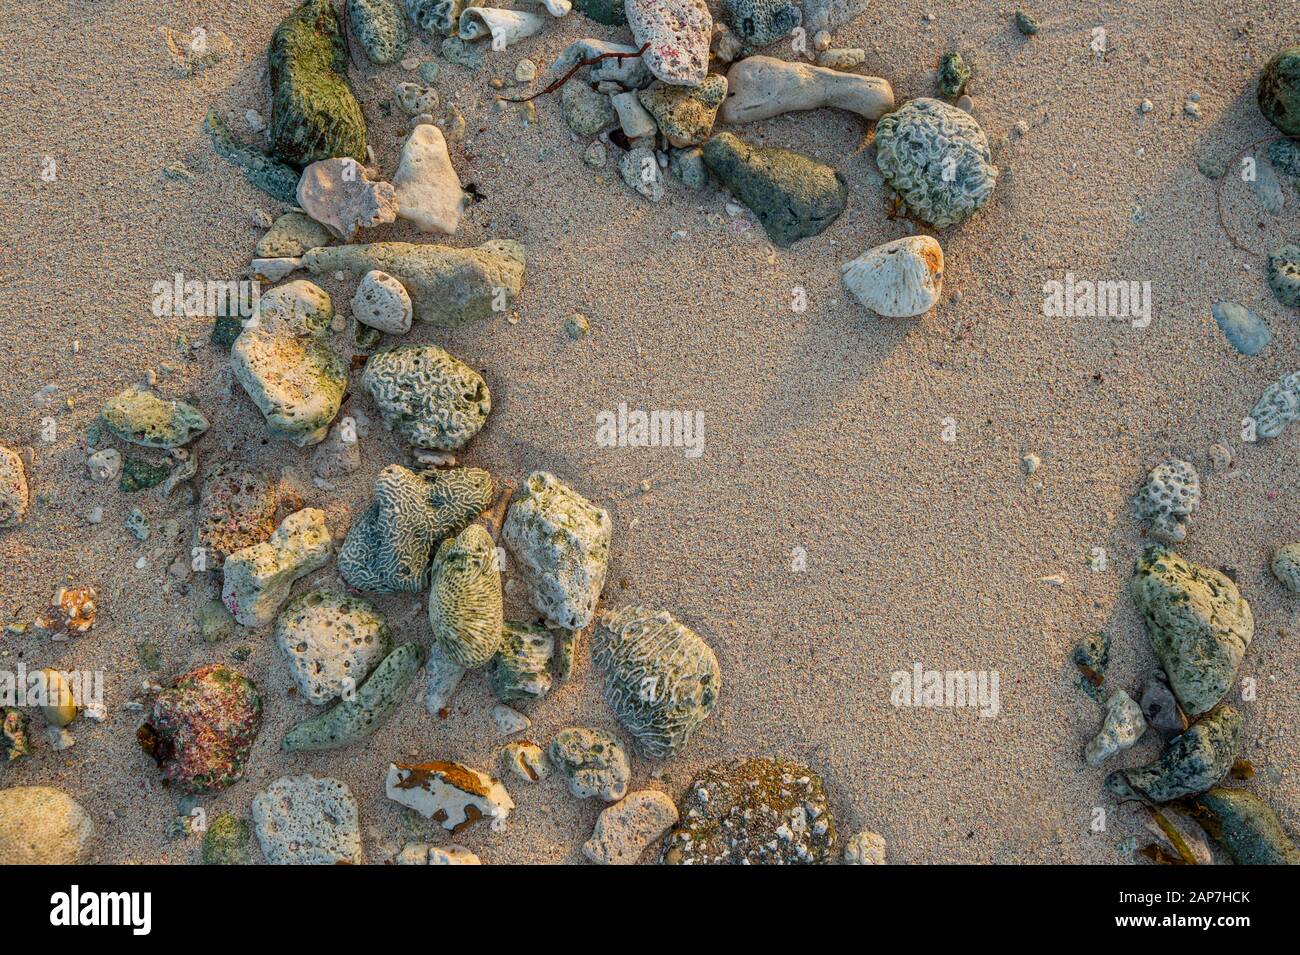 Coral and rocks on sandy beach, Grand Cayman Island Stock Photo